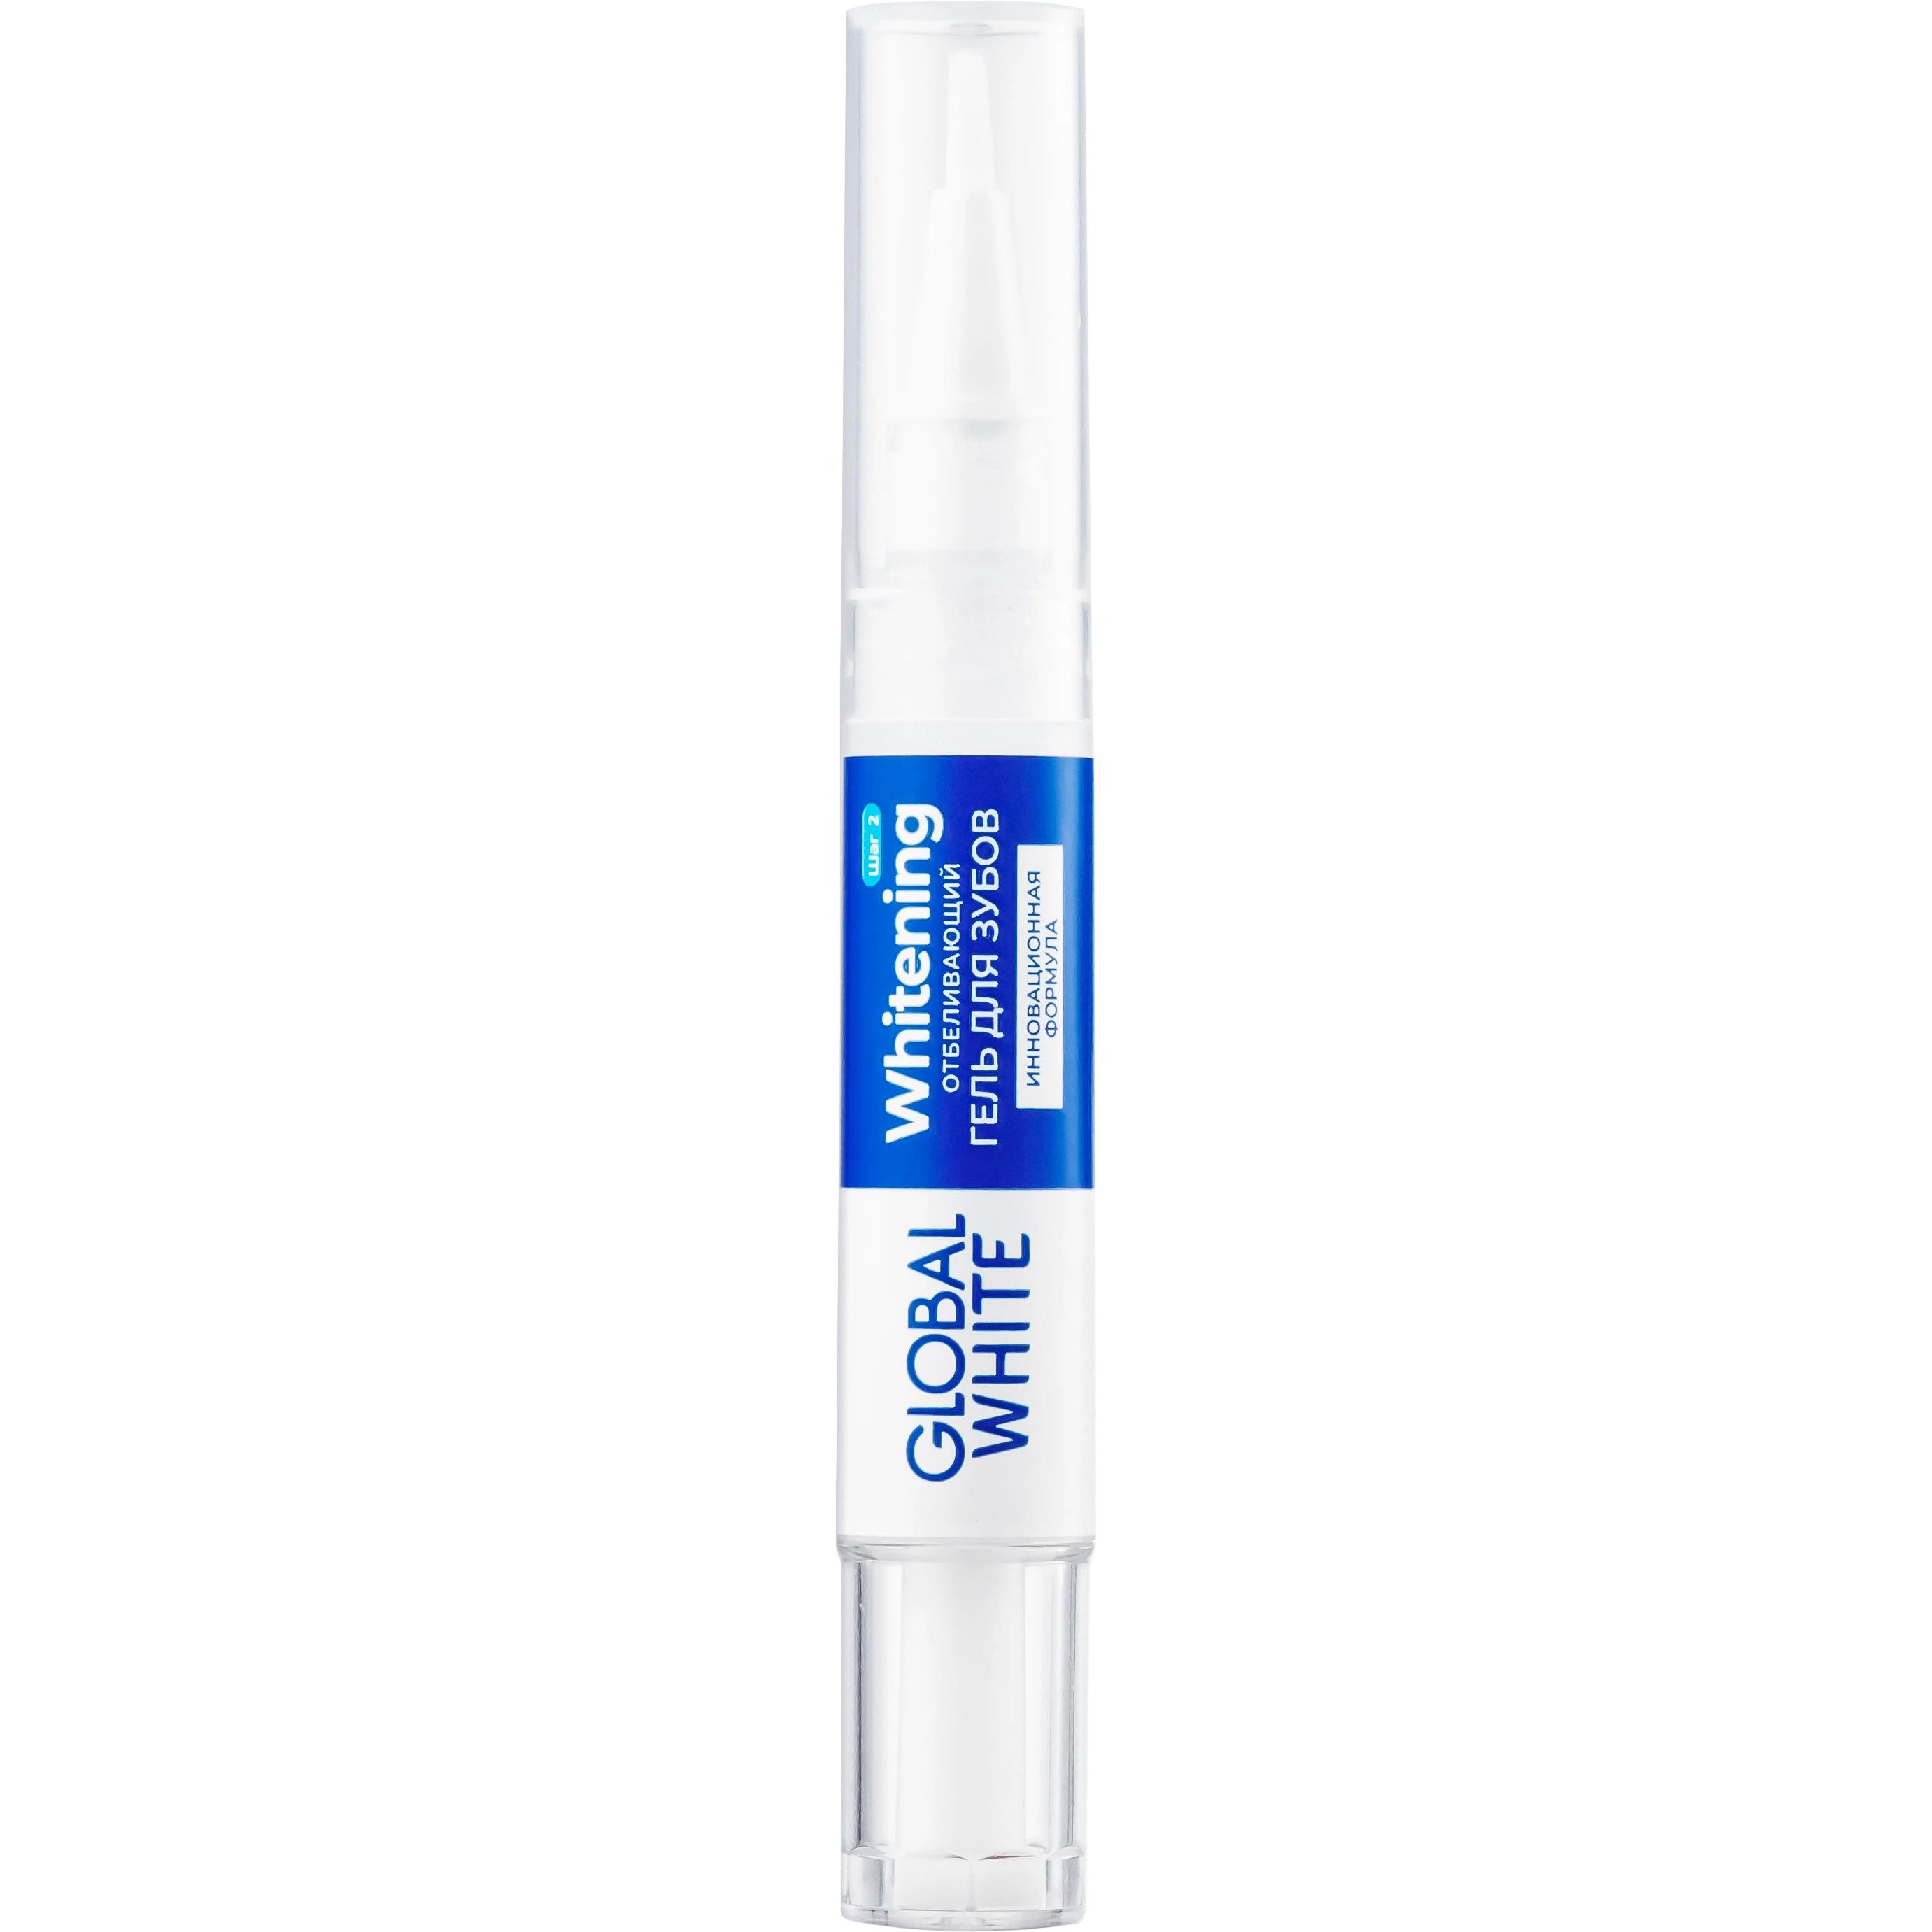 Отбеливающий гель-карандаш GLOBAL WHITE 6%, 5 мл global white полоски для отбеливания зубов активный кислород 2 саше